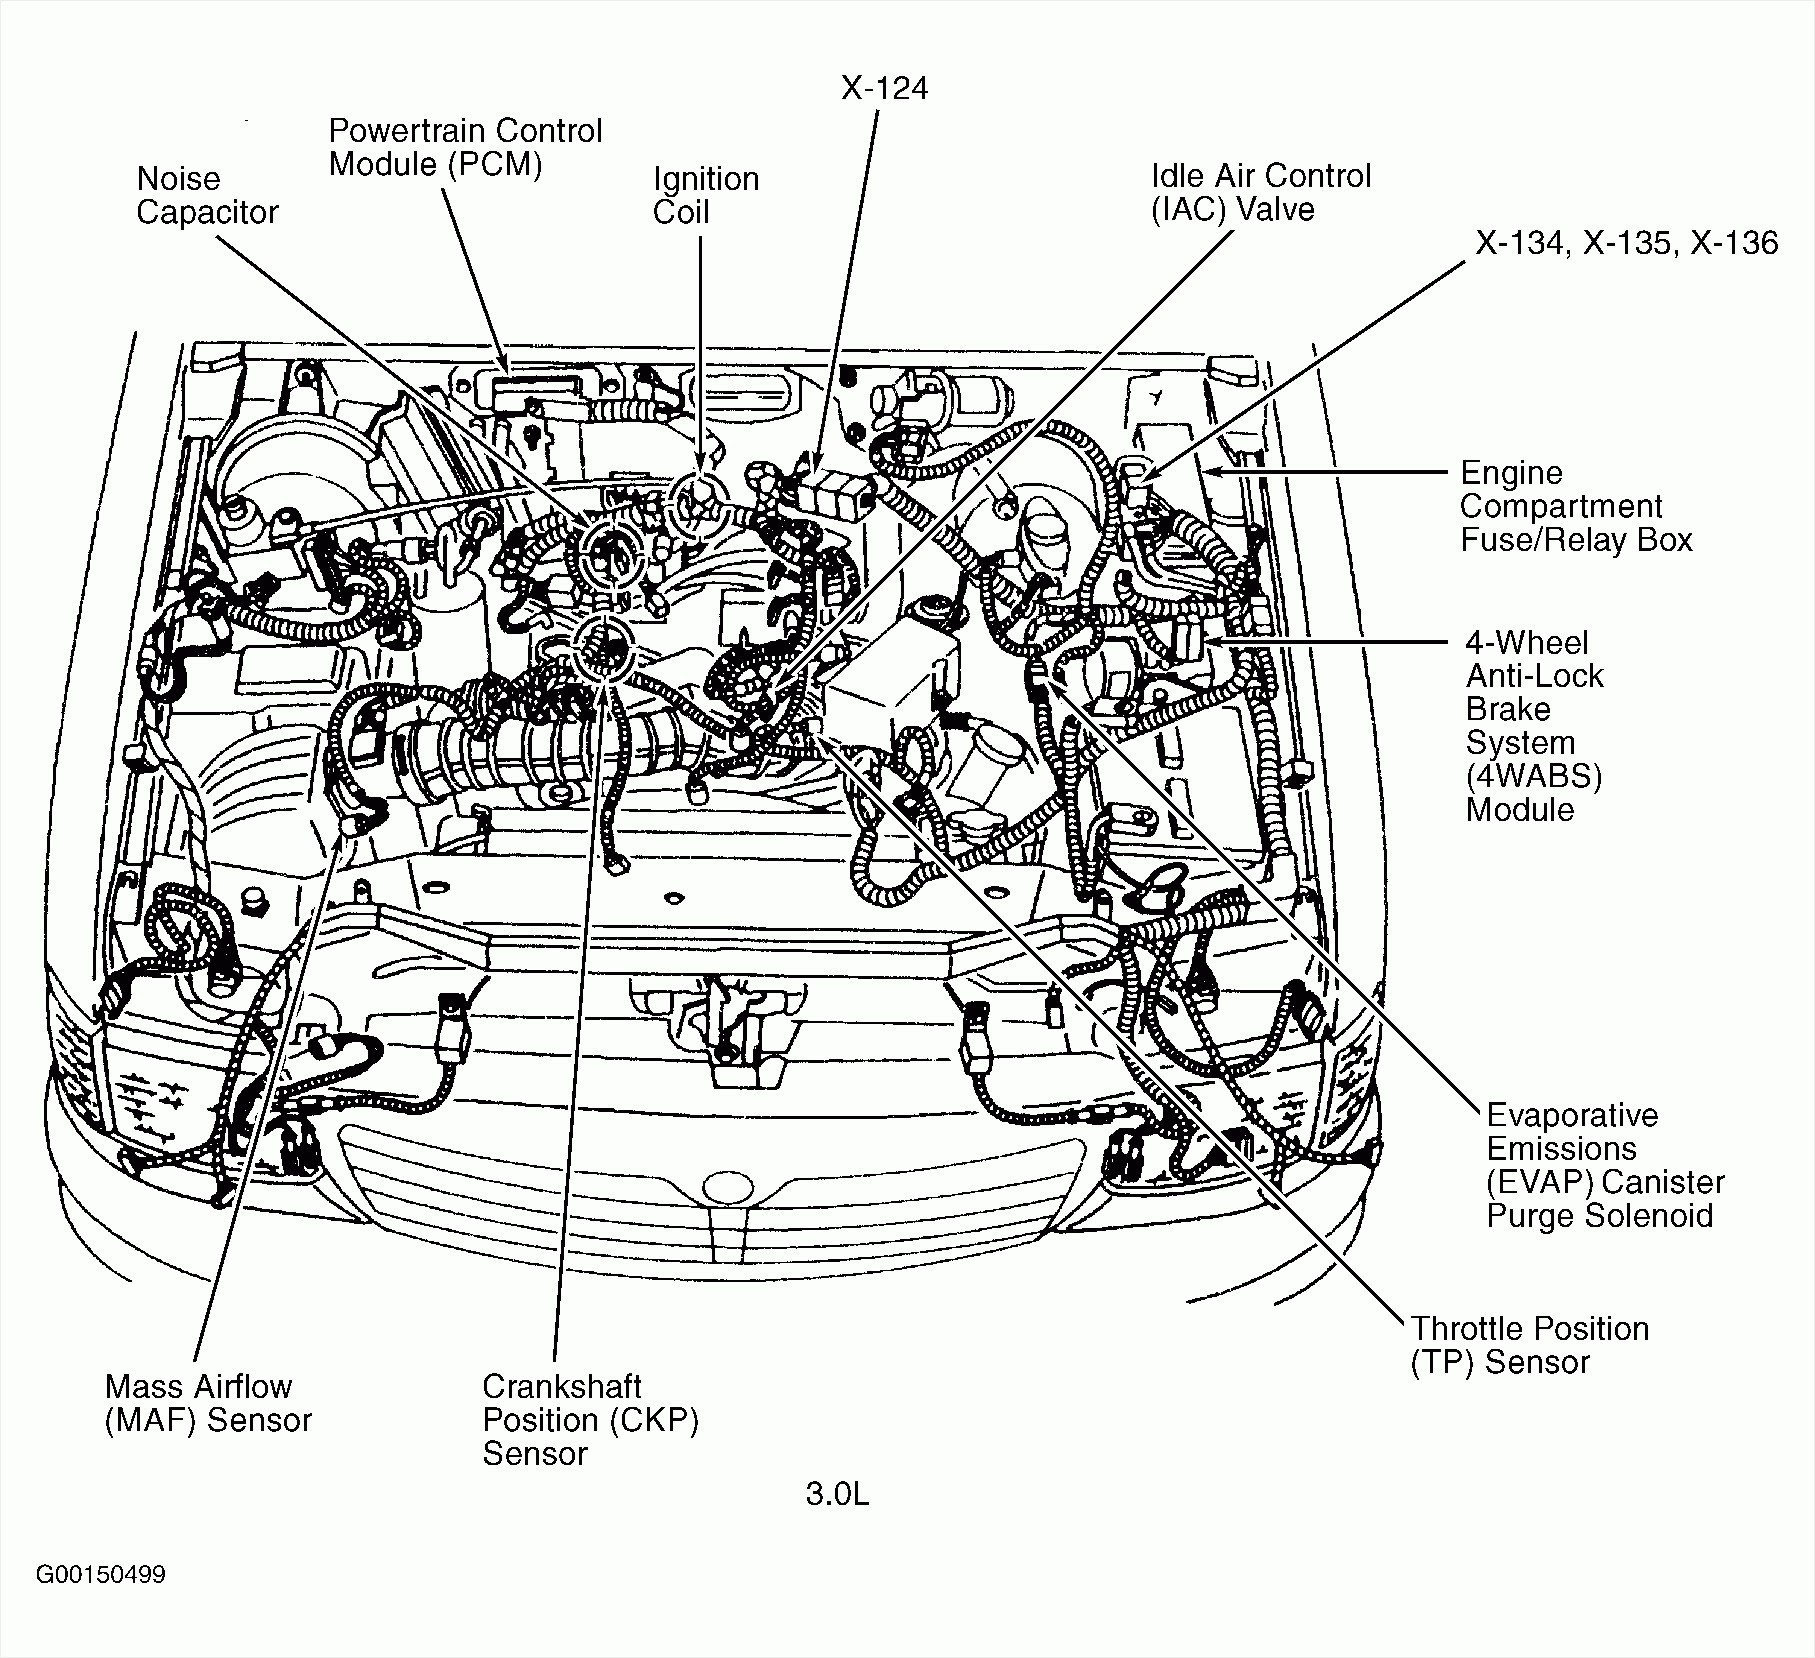 2001 Chevy Cavalier Engine Diagram Chevy 2 4 Engine Diagram Wiring Diagram Load Of 2001 Chevy Cavalier Engine Diagram